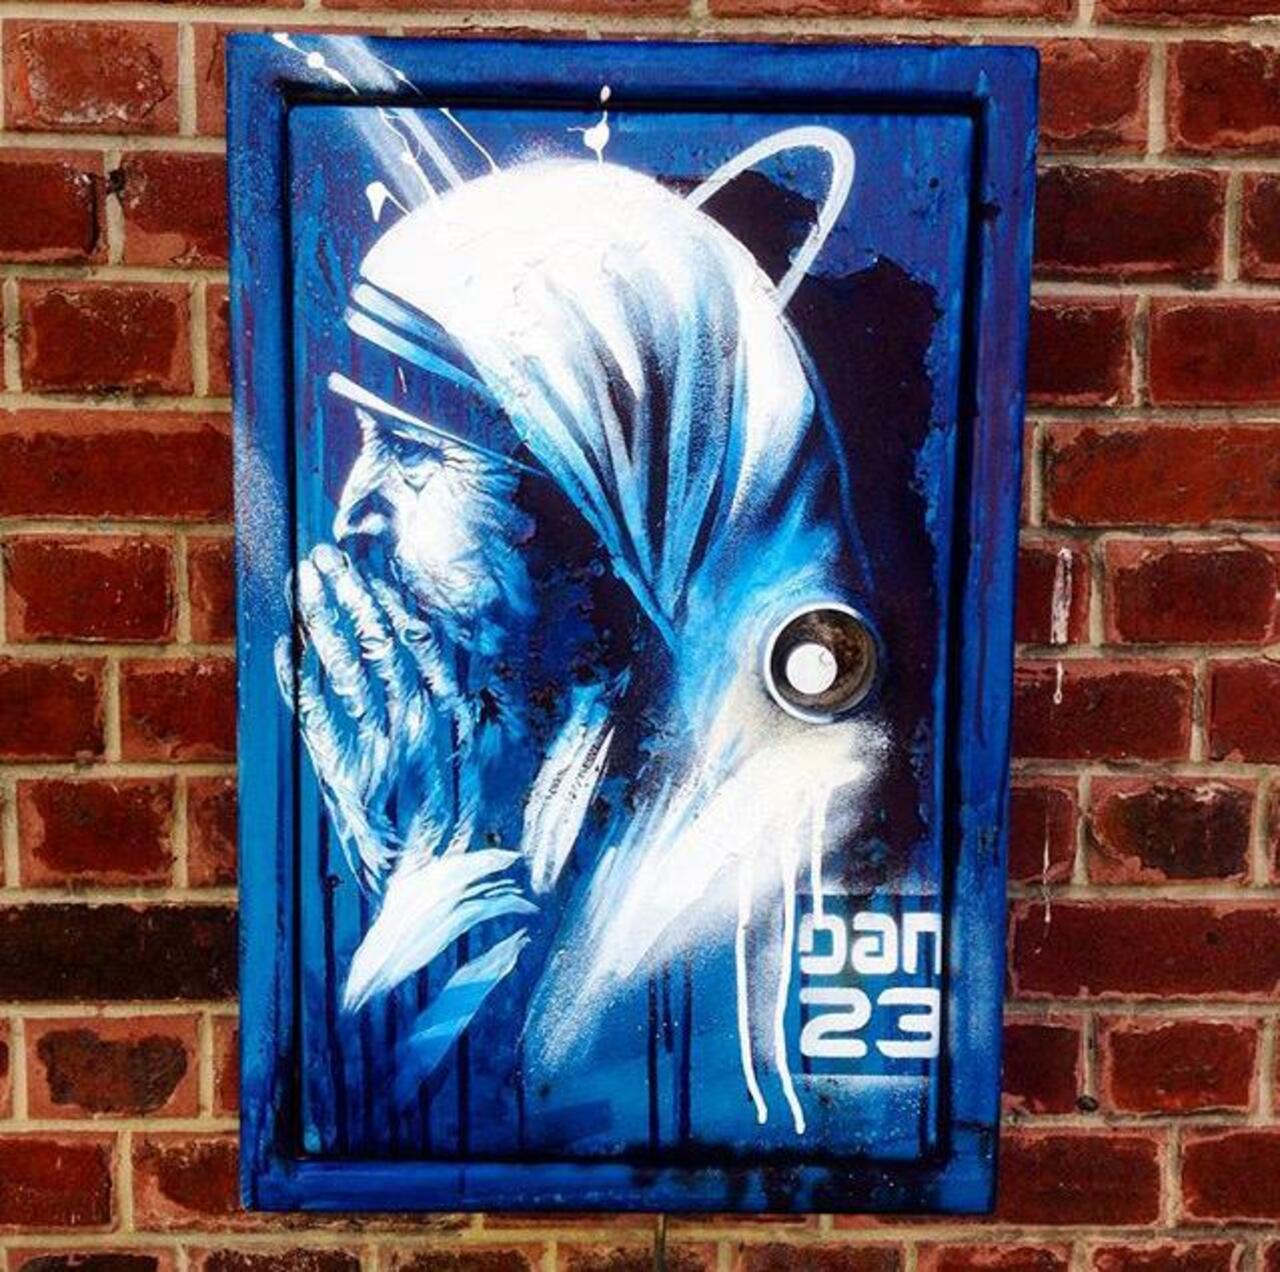 New Street Art 'Détail Spirit' by Dan23 #art #graffiti #mural #streetart http://t.co/PtrgxEwYME … … http://twitter.com/charlesjackso14/status/649568929757691904